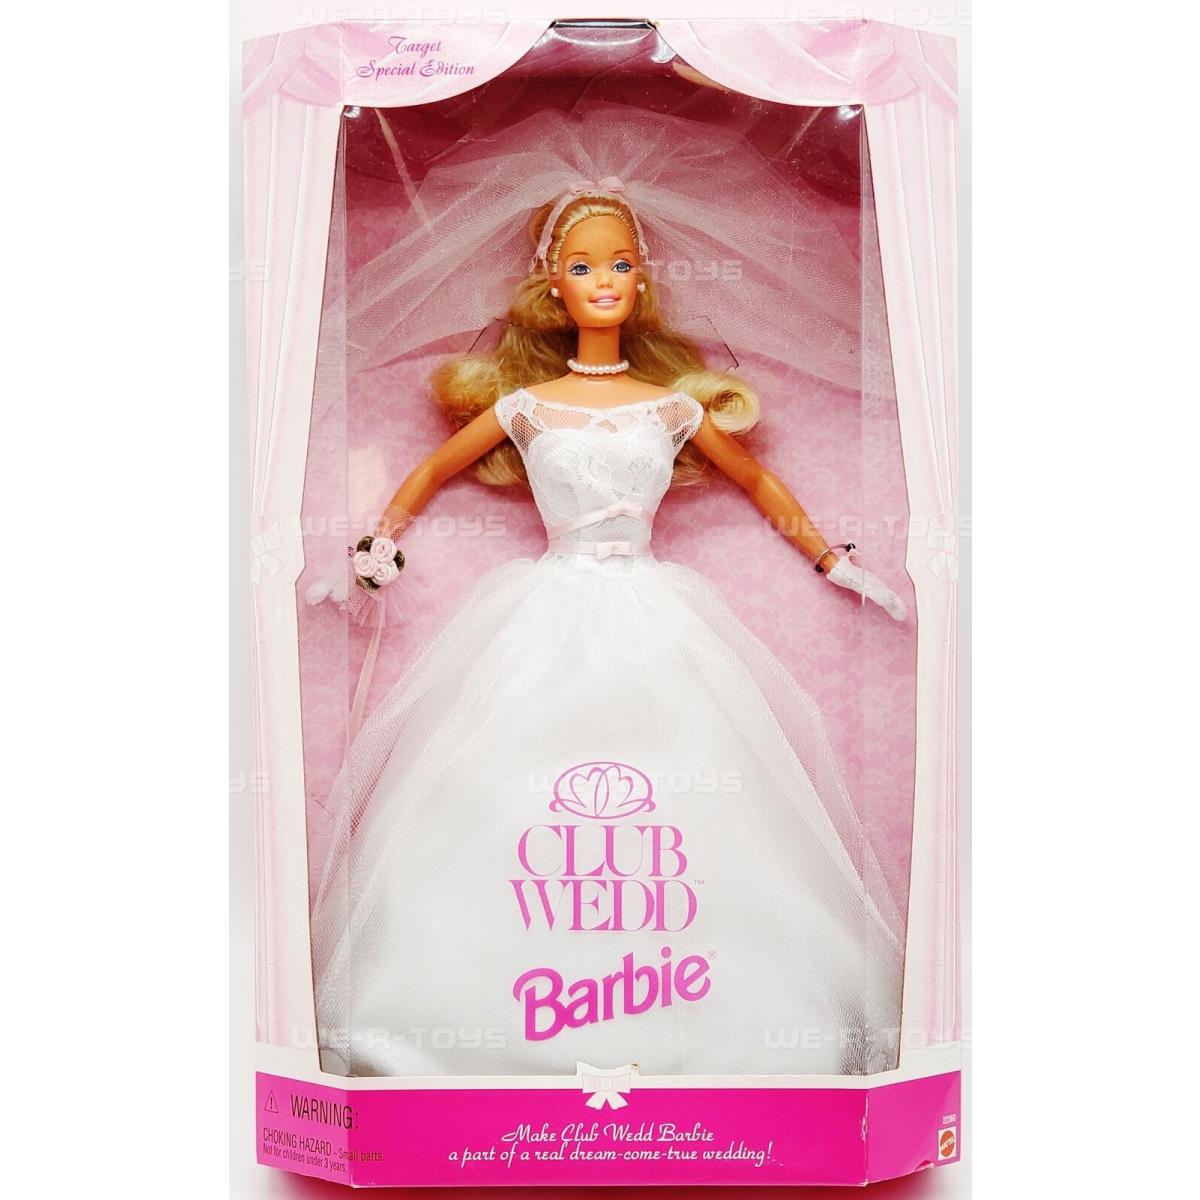 Club Wedd Barbie Doll Target Exclusive Special Edition 1998 Mattel 22360 Nrfb